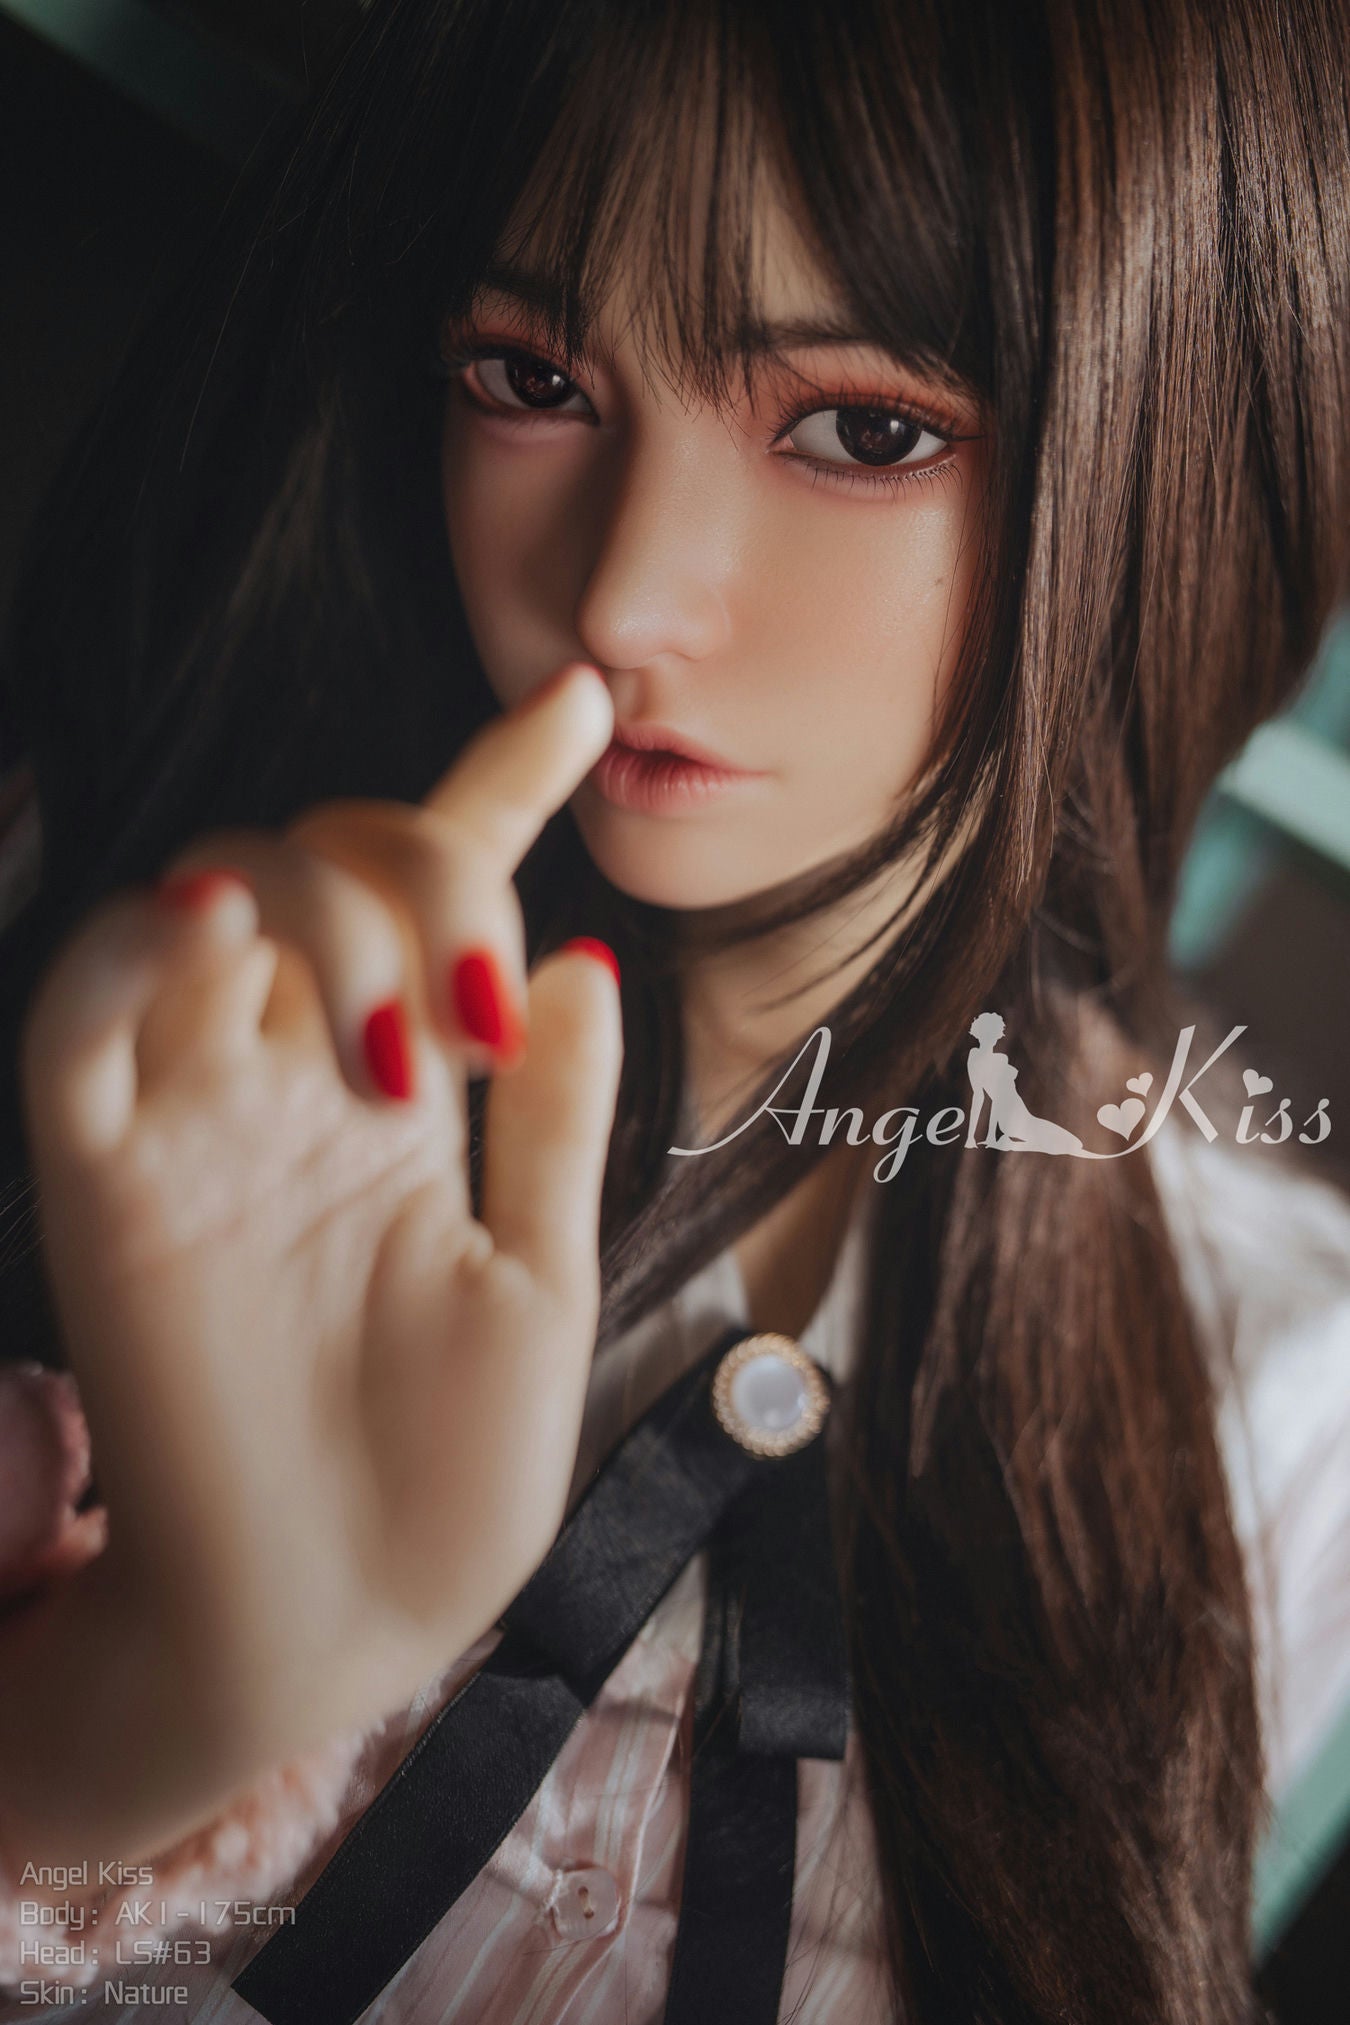 Angel Kiss 175cm E Cup - Silicone - Head LS63